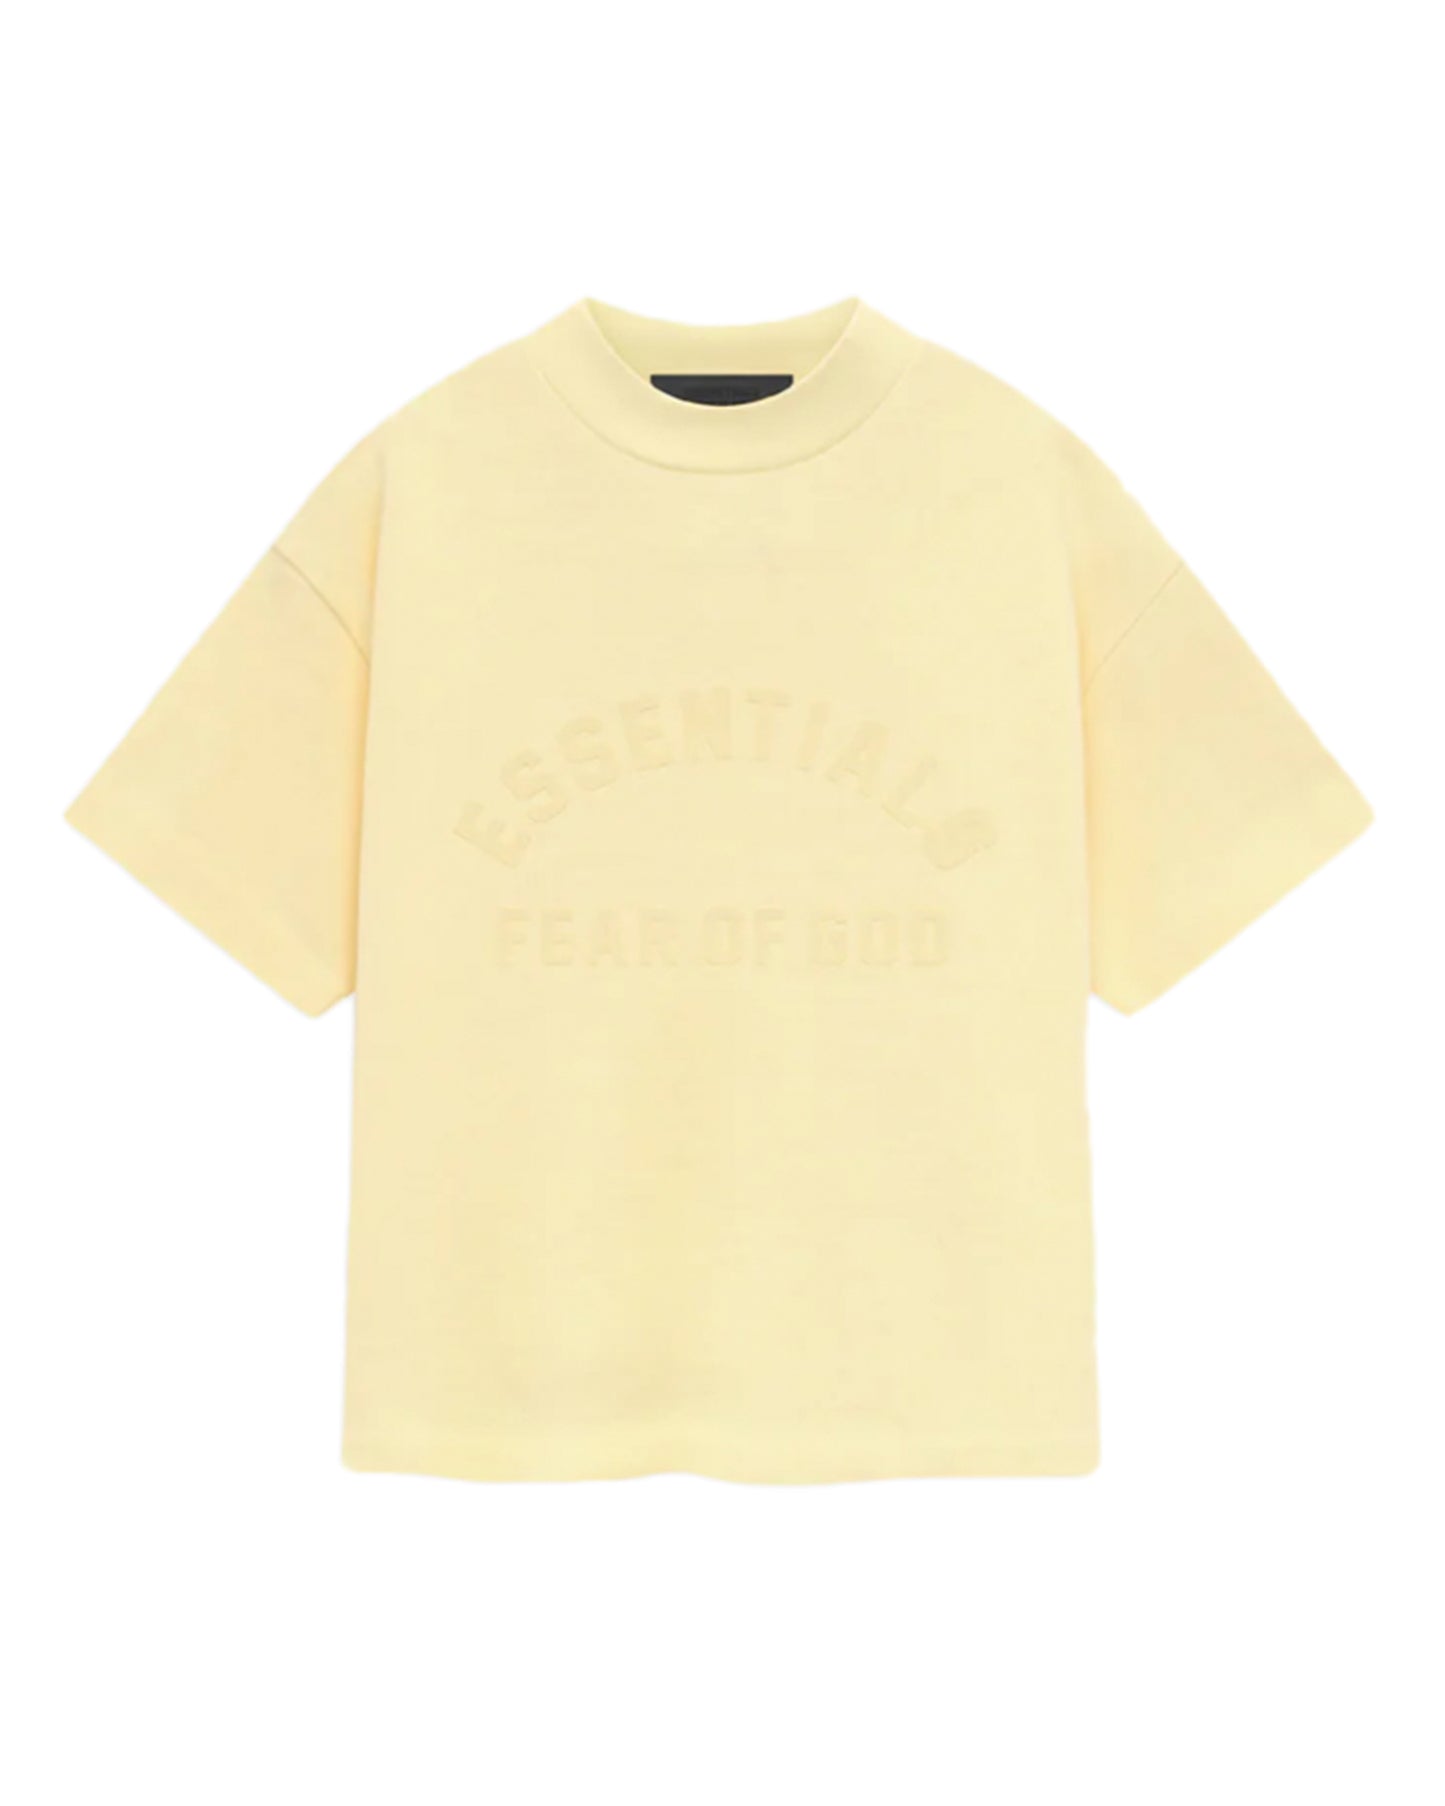 CREWNECK T-SHIRT(Tシャツ) Garden Yellow/KIDS